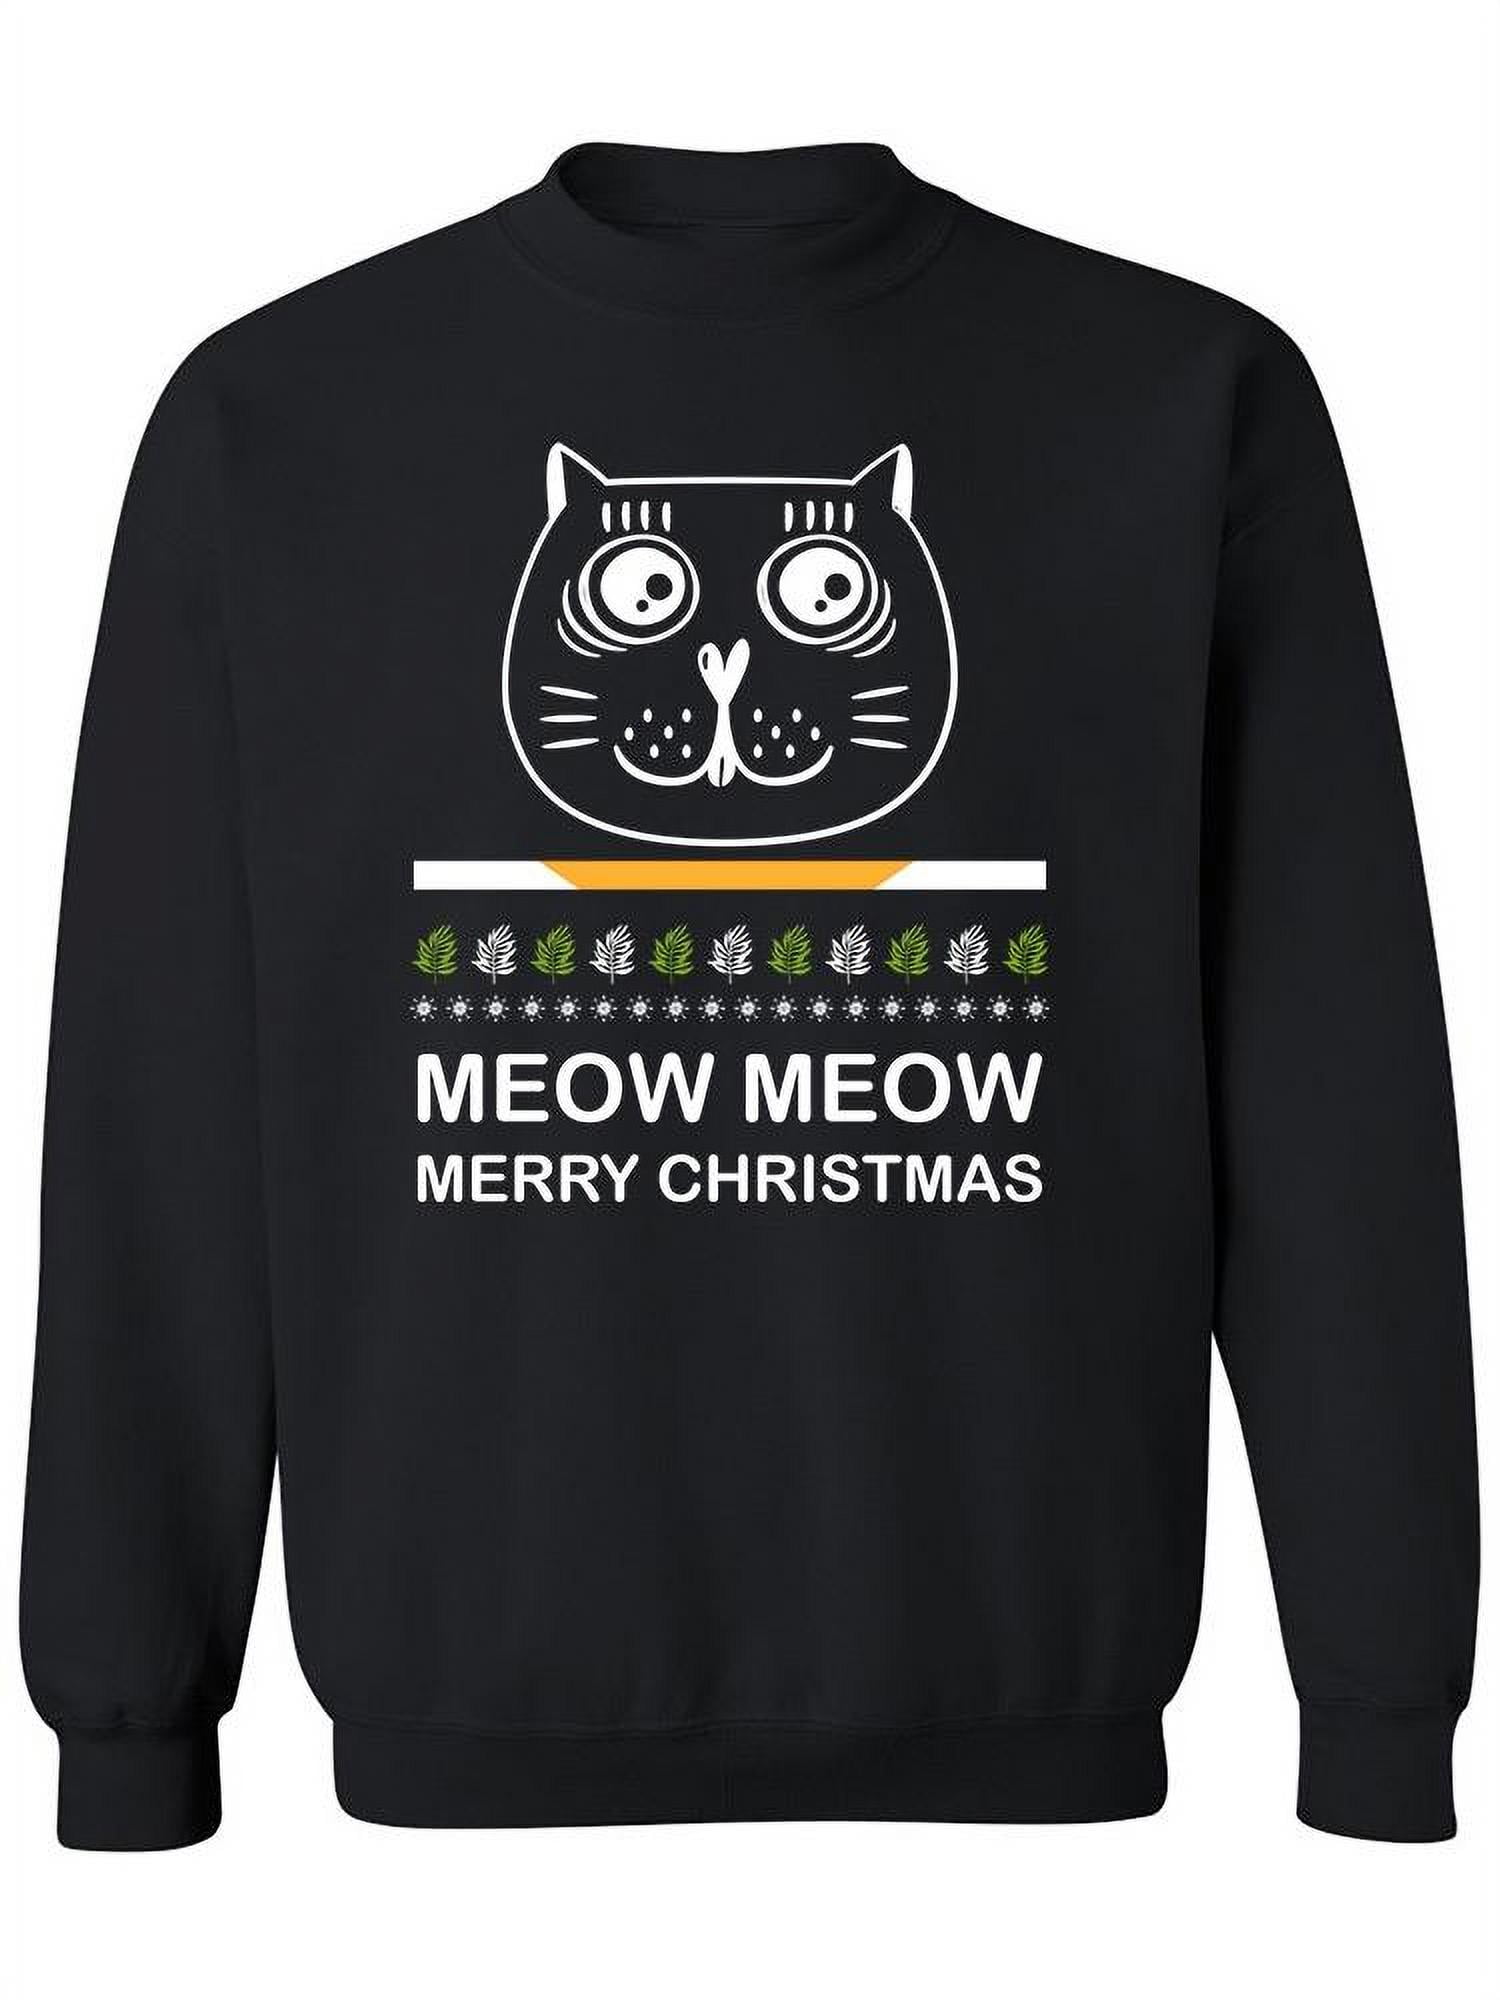 Meow Meow Merry Christmas Sweatshirt Women -Image by Shutterstock ...